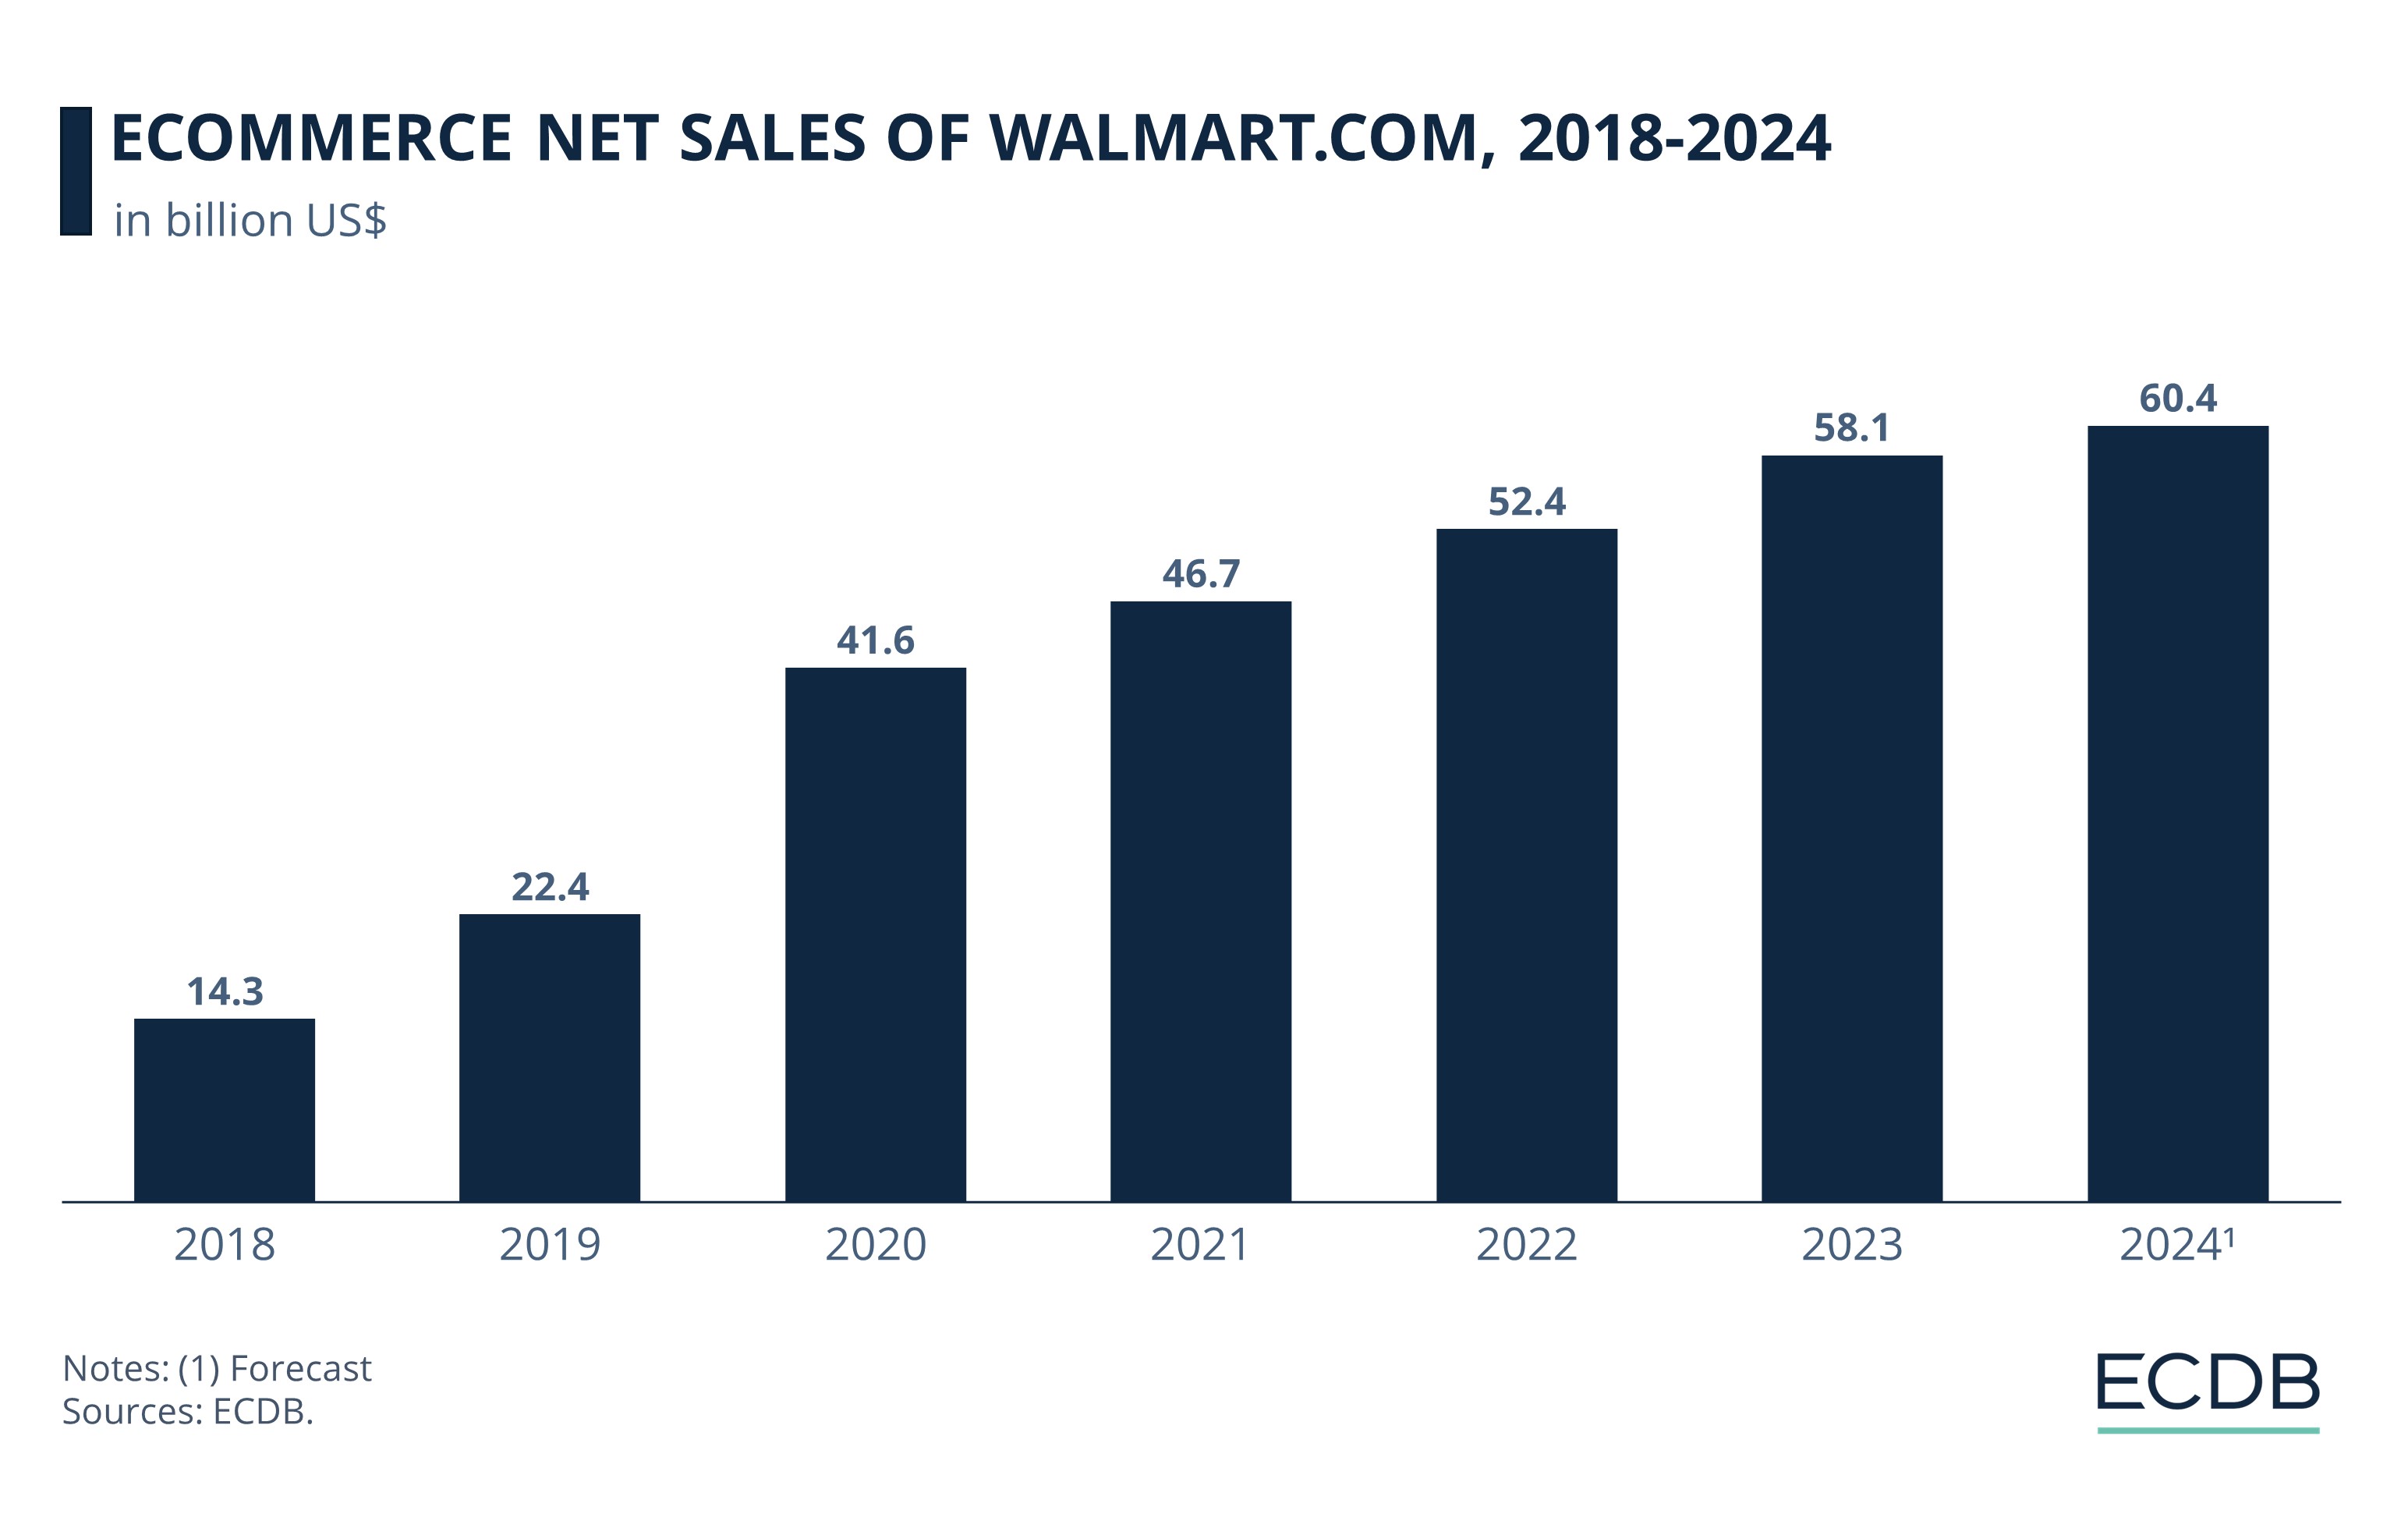 eCommerce Net Sales of Walmart.com, 2018-2024